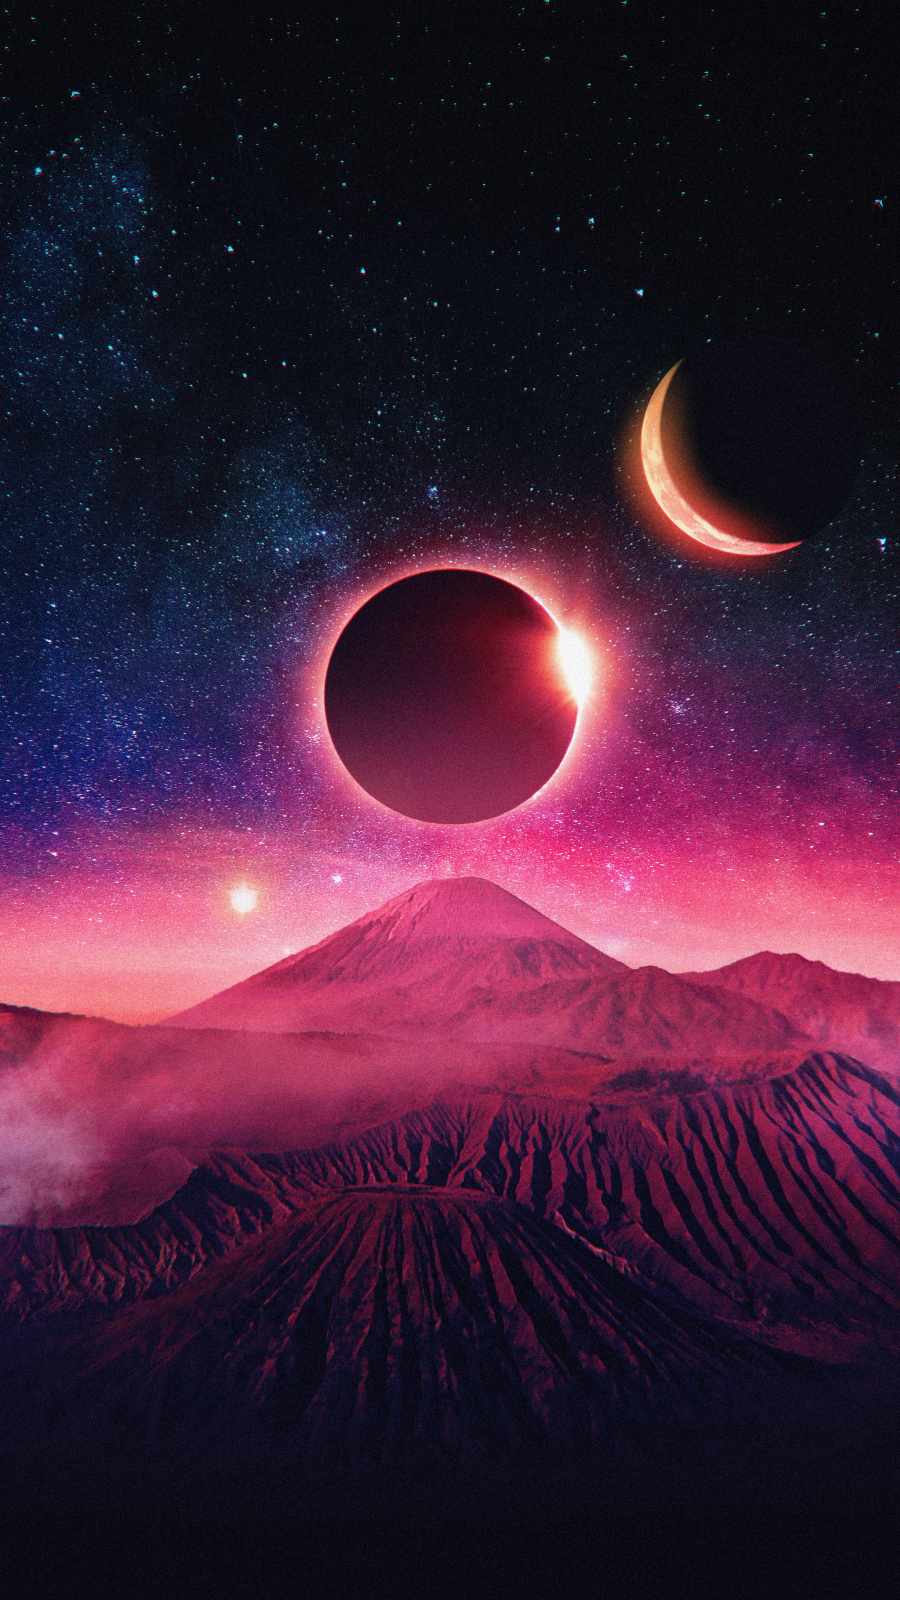 Moon Eclipse Art iPhone Wallpaper